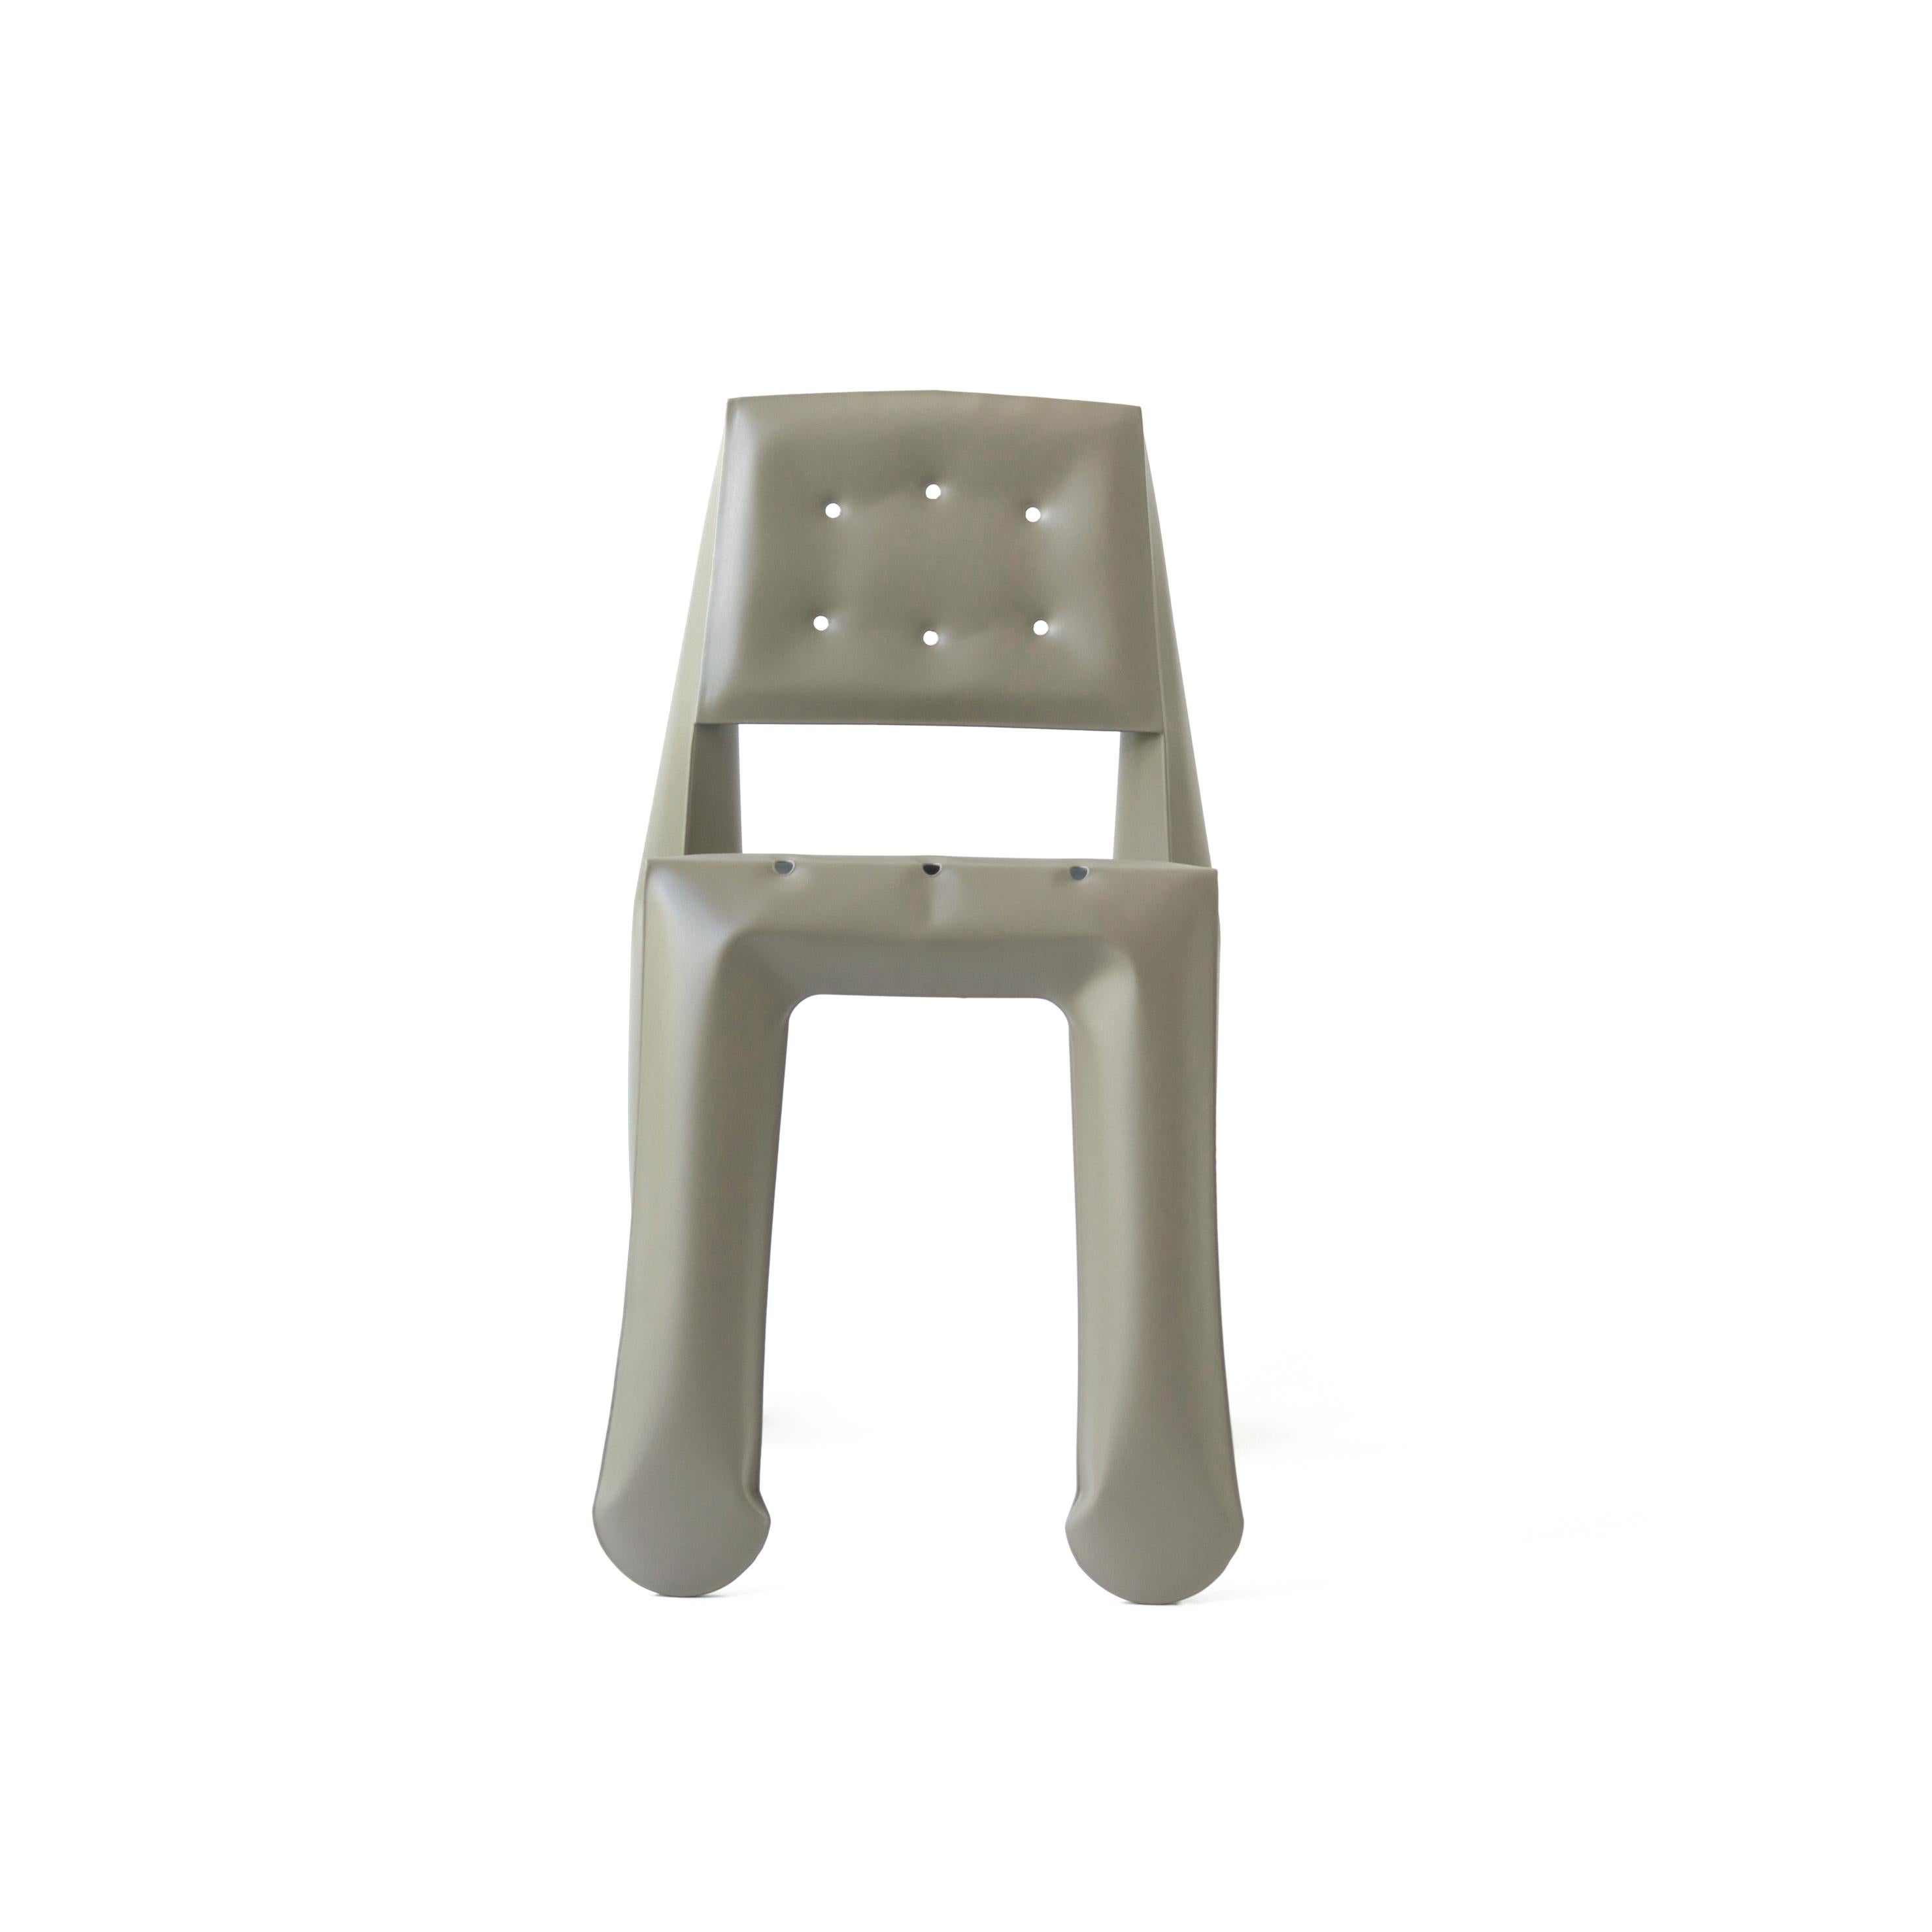 Organic Modern Beige Carbon Steel Chippensteel 0.5 Sculptural Chair by Zieta For Sale